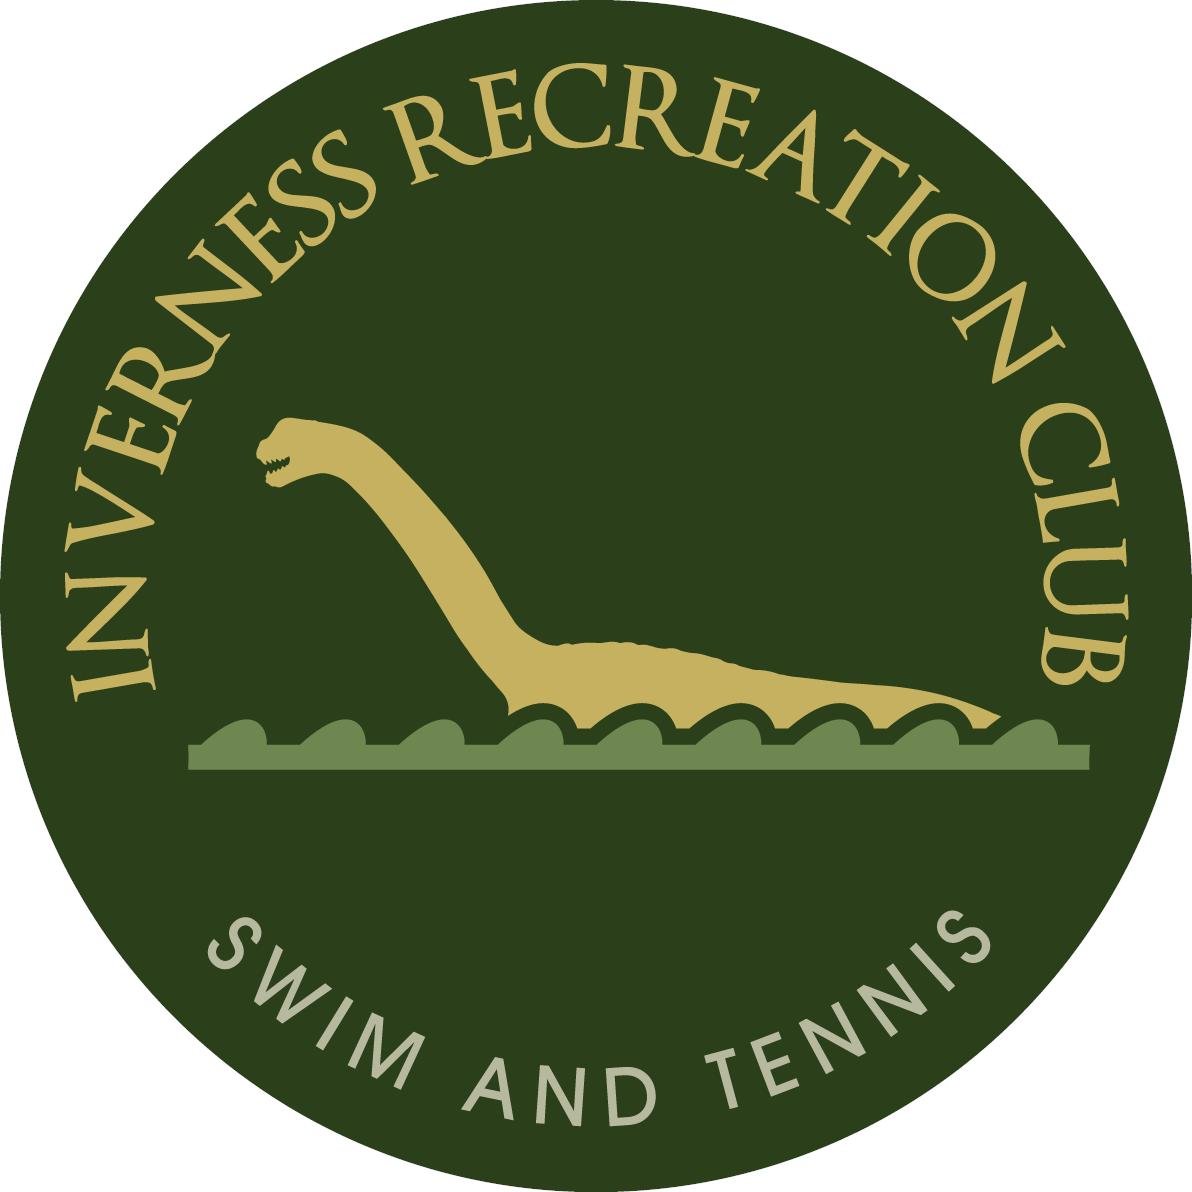 Inverness Recreation Club